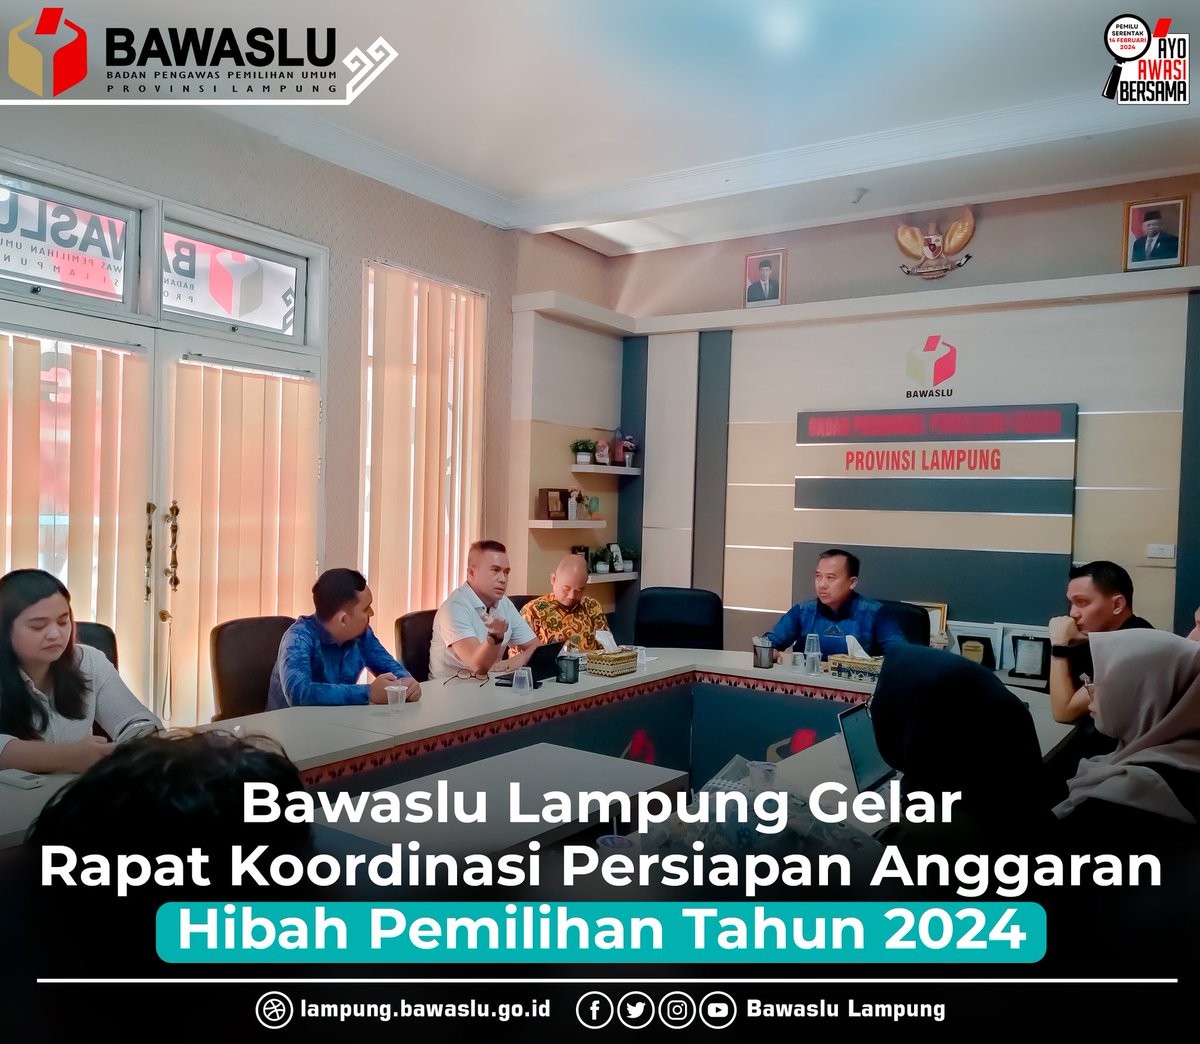 Bawaslu Lampung telah melaksanakan Rapat Koordinasi guna Persiapan Anggaran Hibah Pemilihan Tahun 2024 pada hari Kamis (18/04). 

Selengkapnya : lampung.bawaslu.go.id/bawaslu-lampun…

#AyoAwasiBersama
#KawalHakPilih
#BawasluRI
#BawasluLampung
----------------------------------